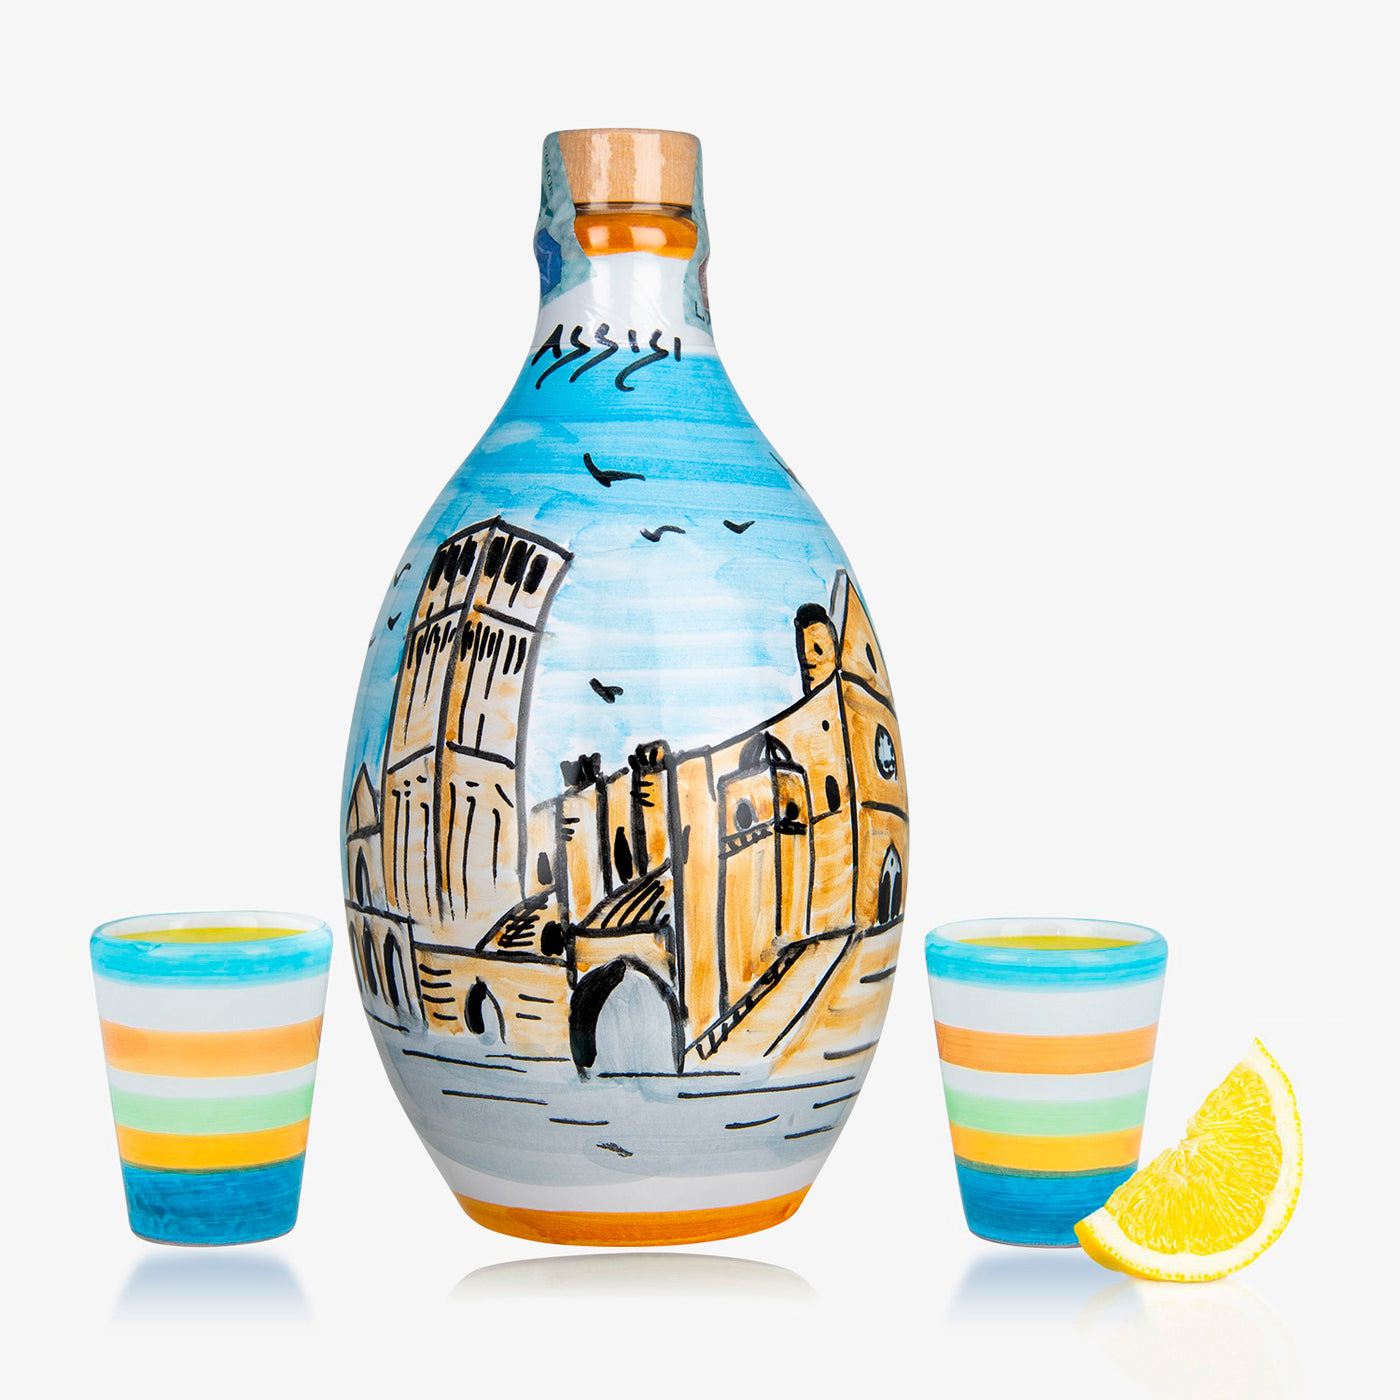 'Assisi' - Handmade Jar Limoncello and two Glasses